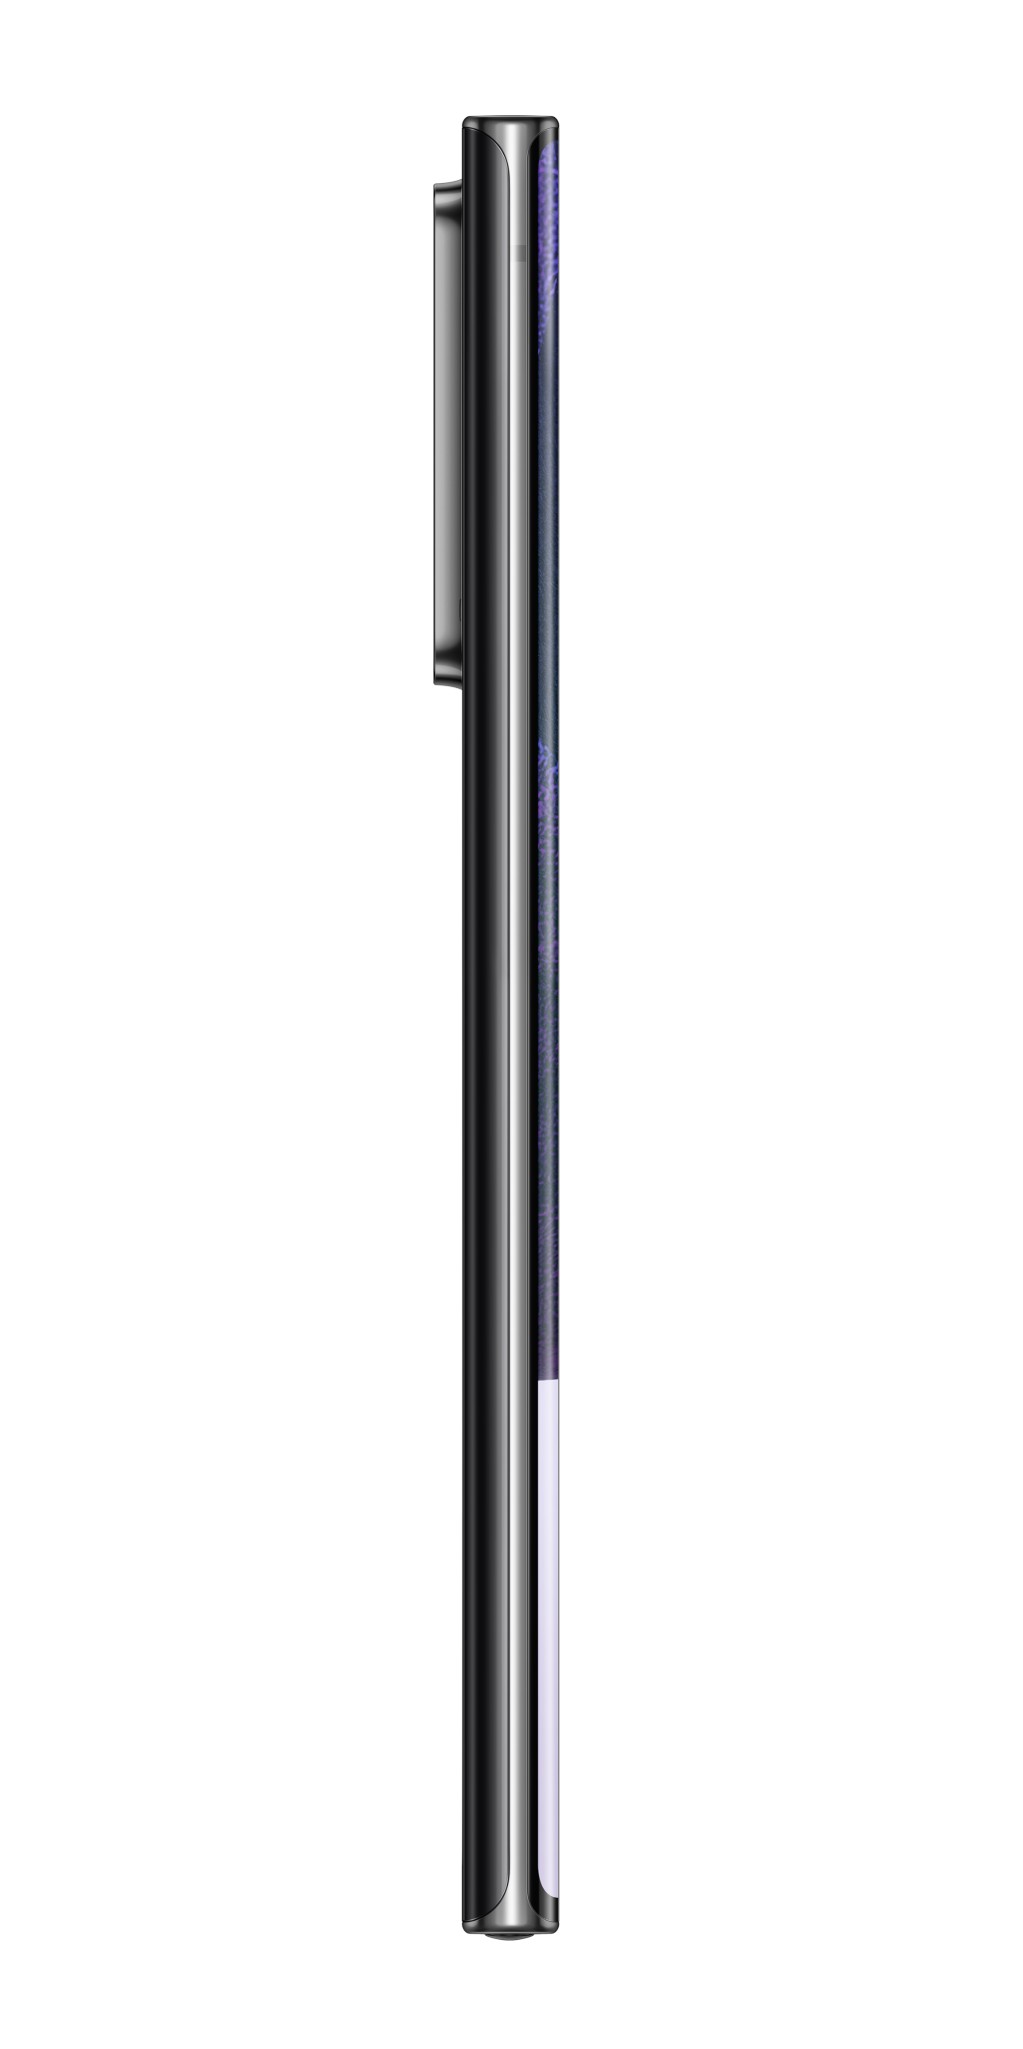 AT&T Samsung Galaxy Note20 Ultra 5G 128GB, Mystic Black - image 2 of 3